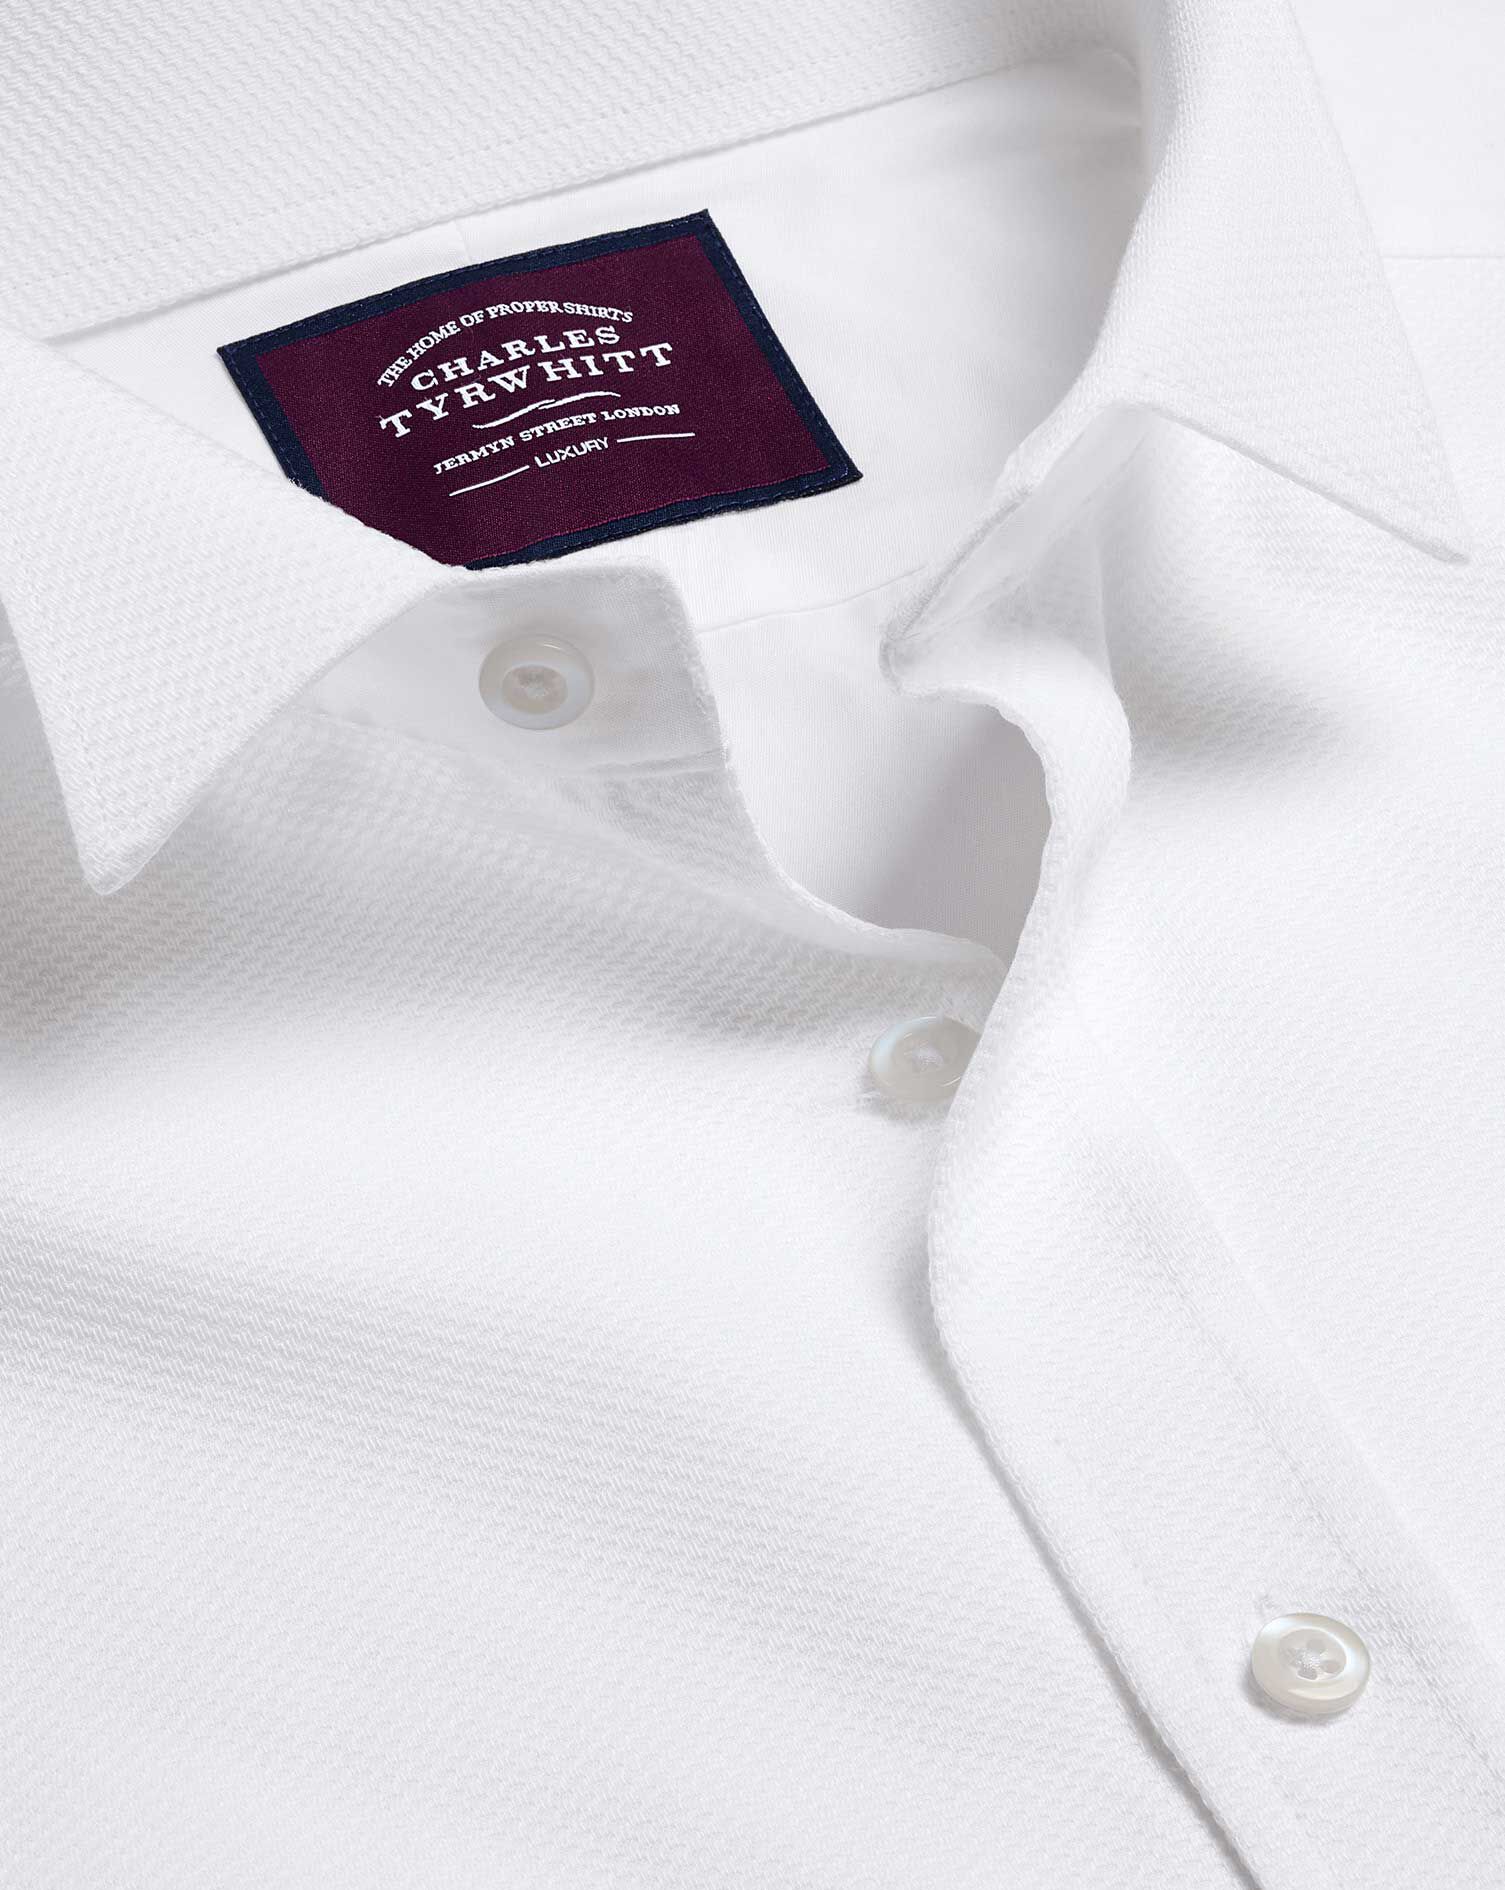 Charles Tyrwhitt Charles Tyrwhitt  White LuxuryCotton Shirt Collar Size 16” 34”Neck Slim Fit Used 